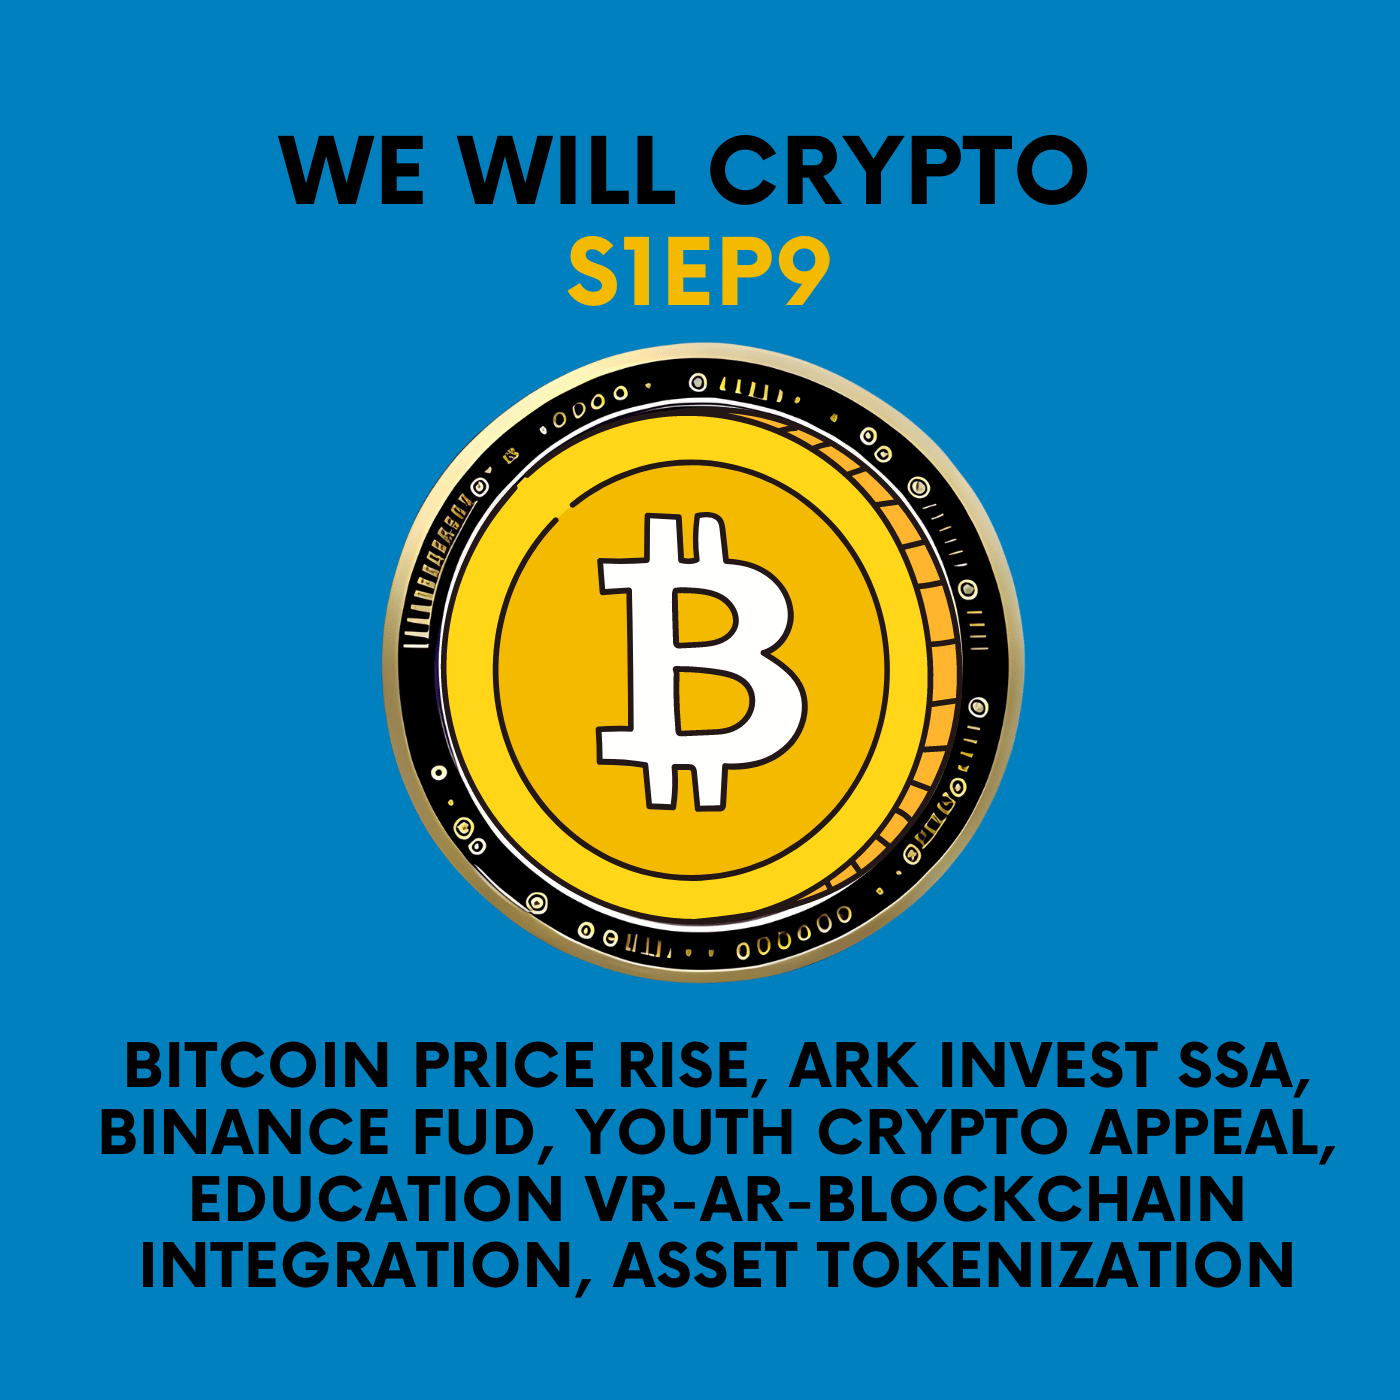 Bitcoin Price Rise, ARK Invest SSA, Binance FUD, Youth Crypto Appeal, Education VR-AR-Blockchain Integration, Asset Tokenization post thumbnail image